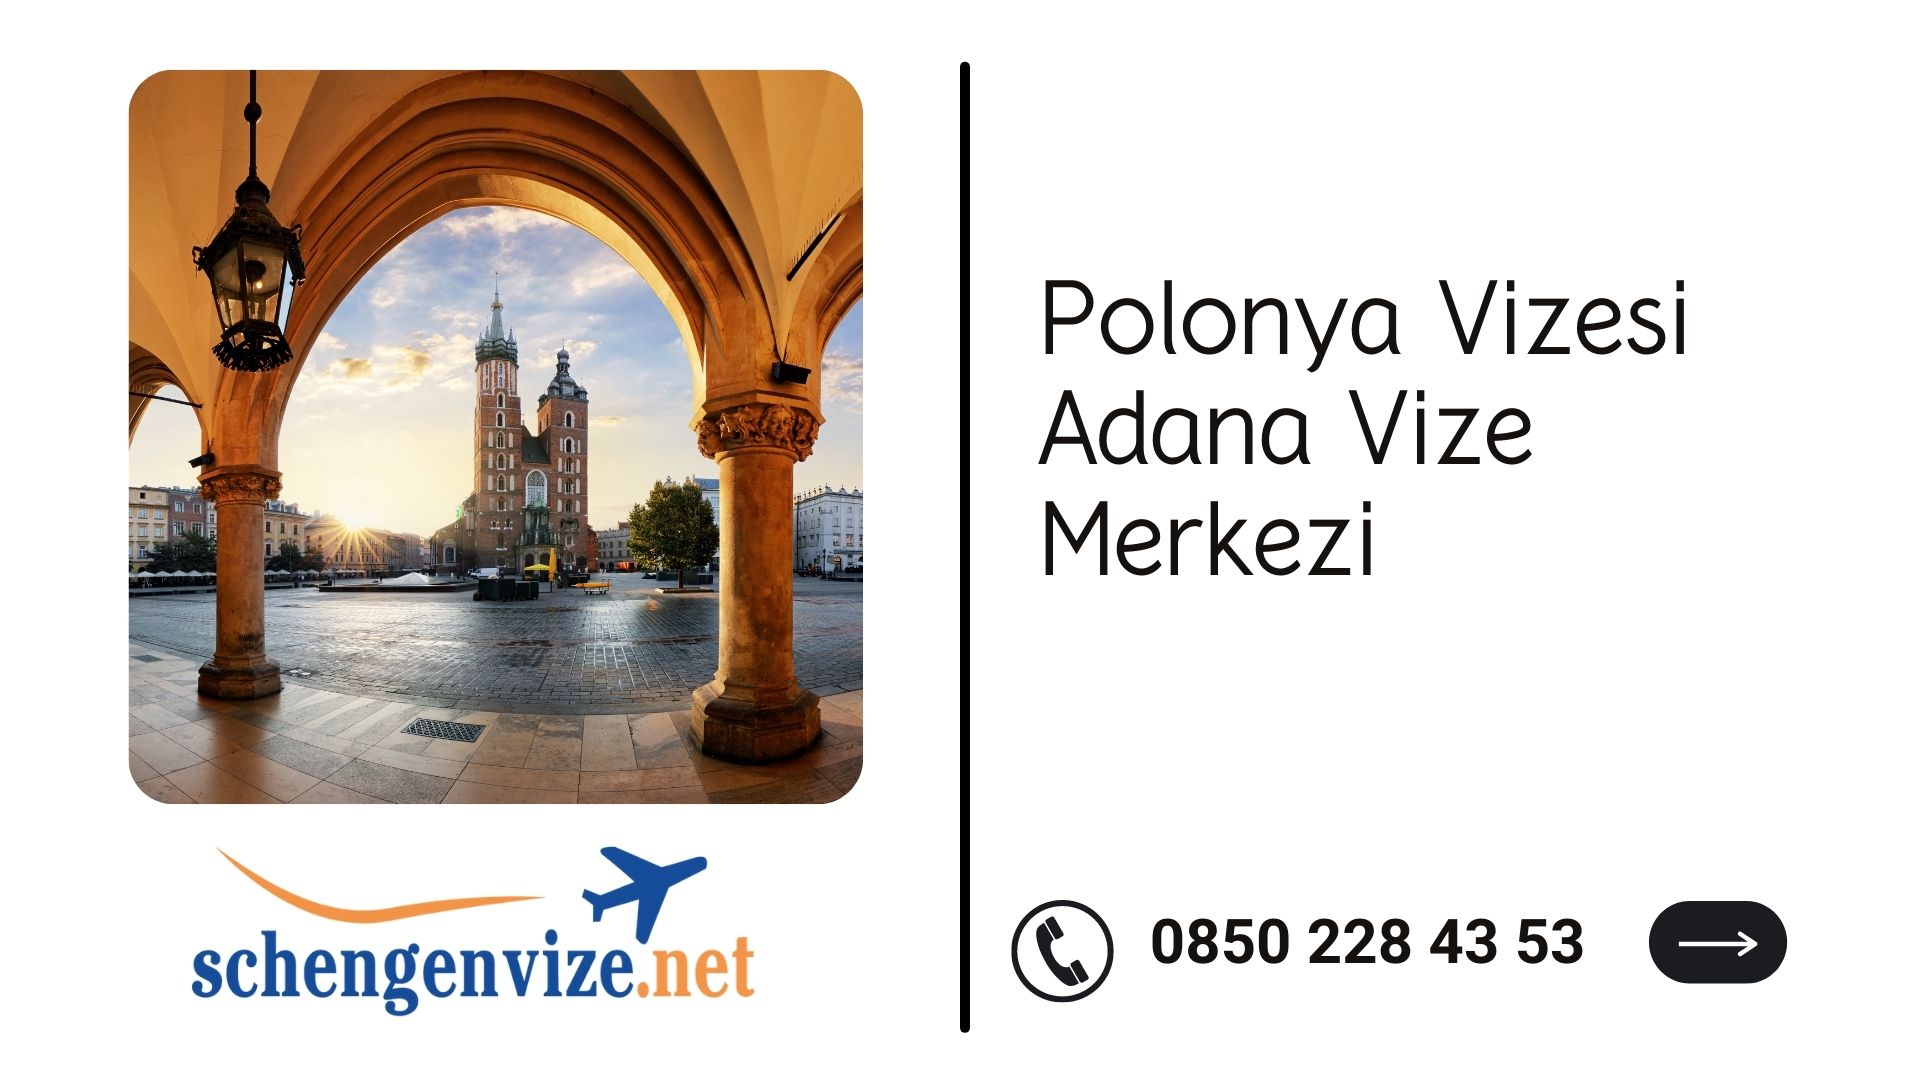 Polonya Vizesi Adana Vize Merkezi